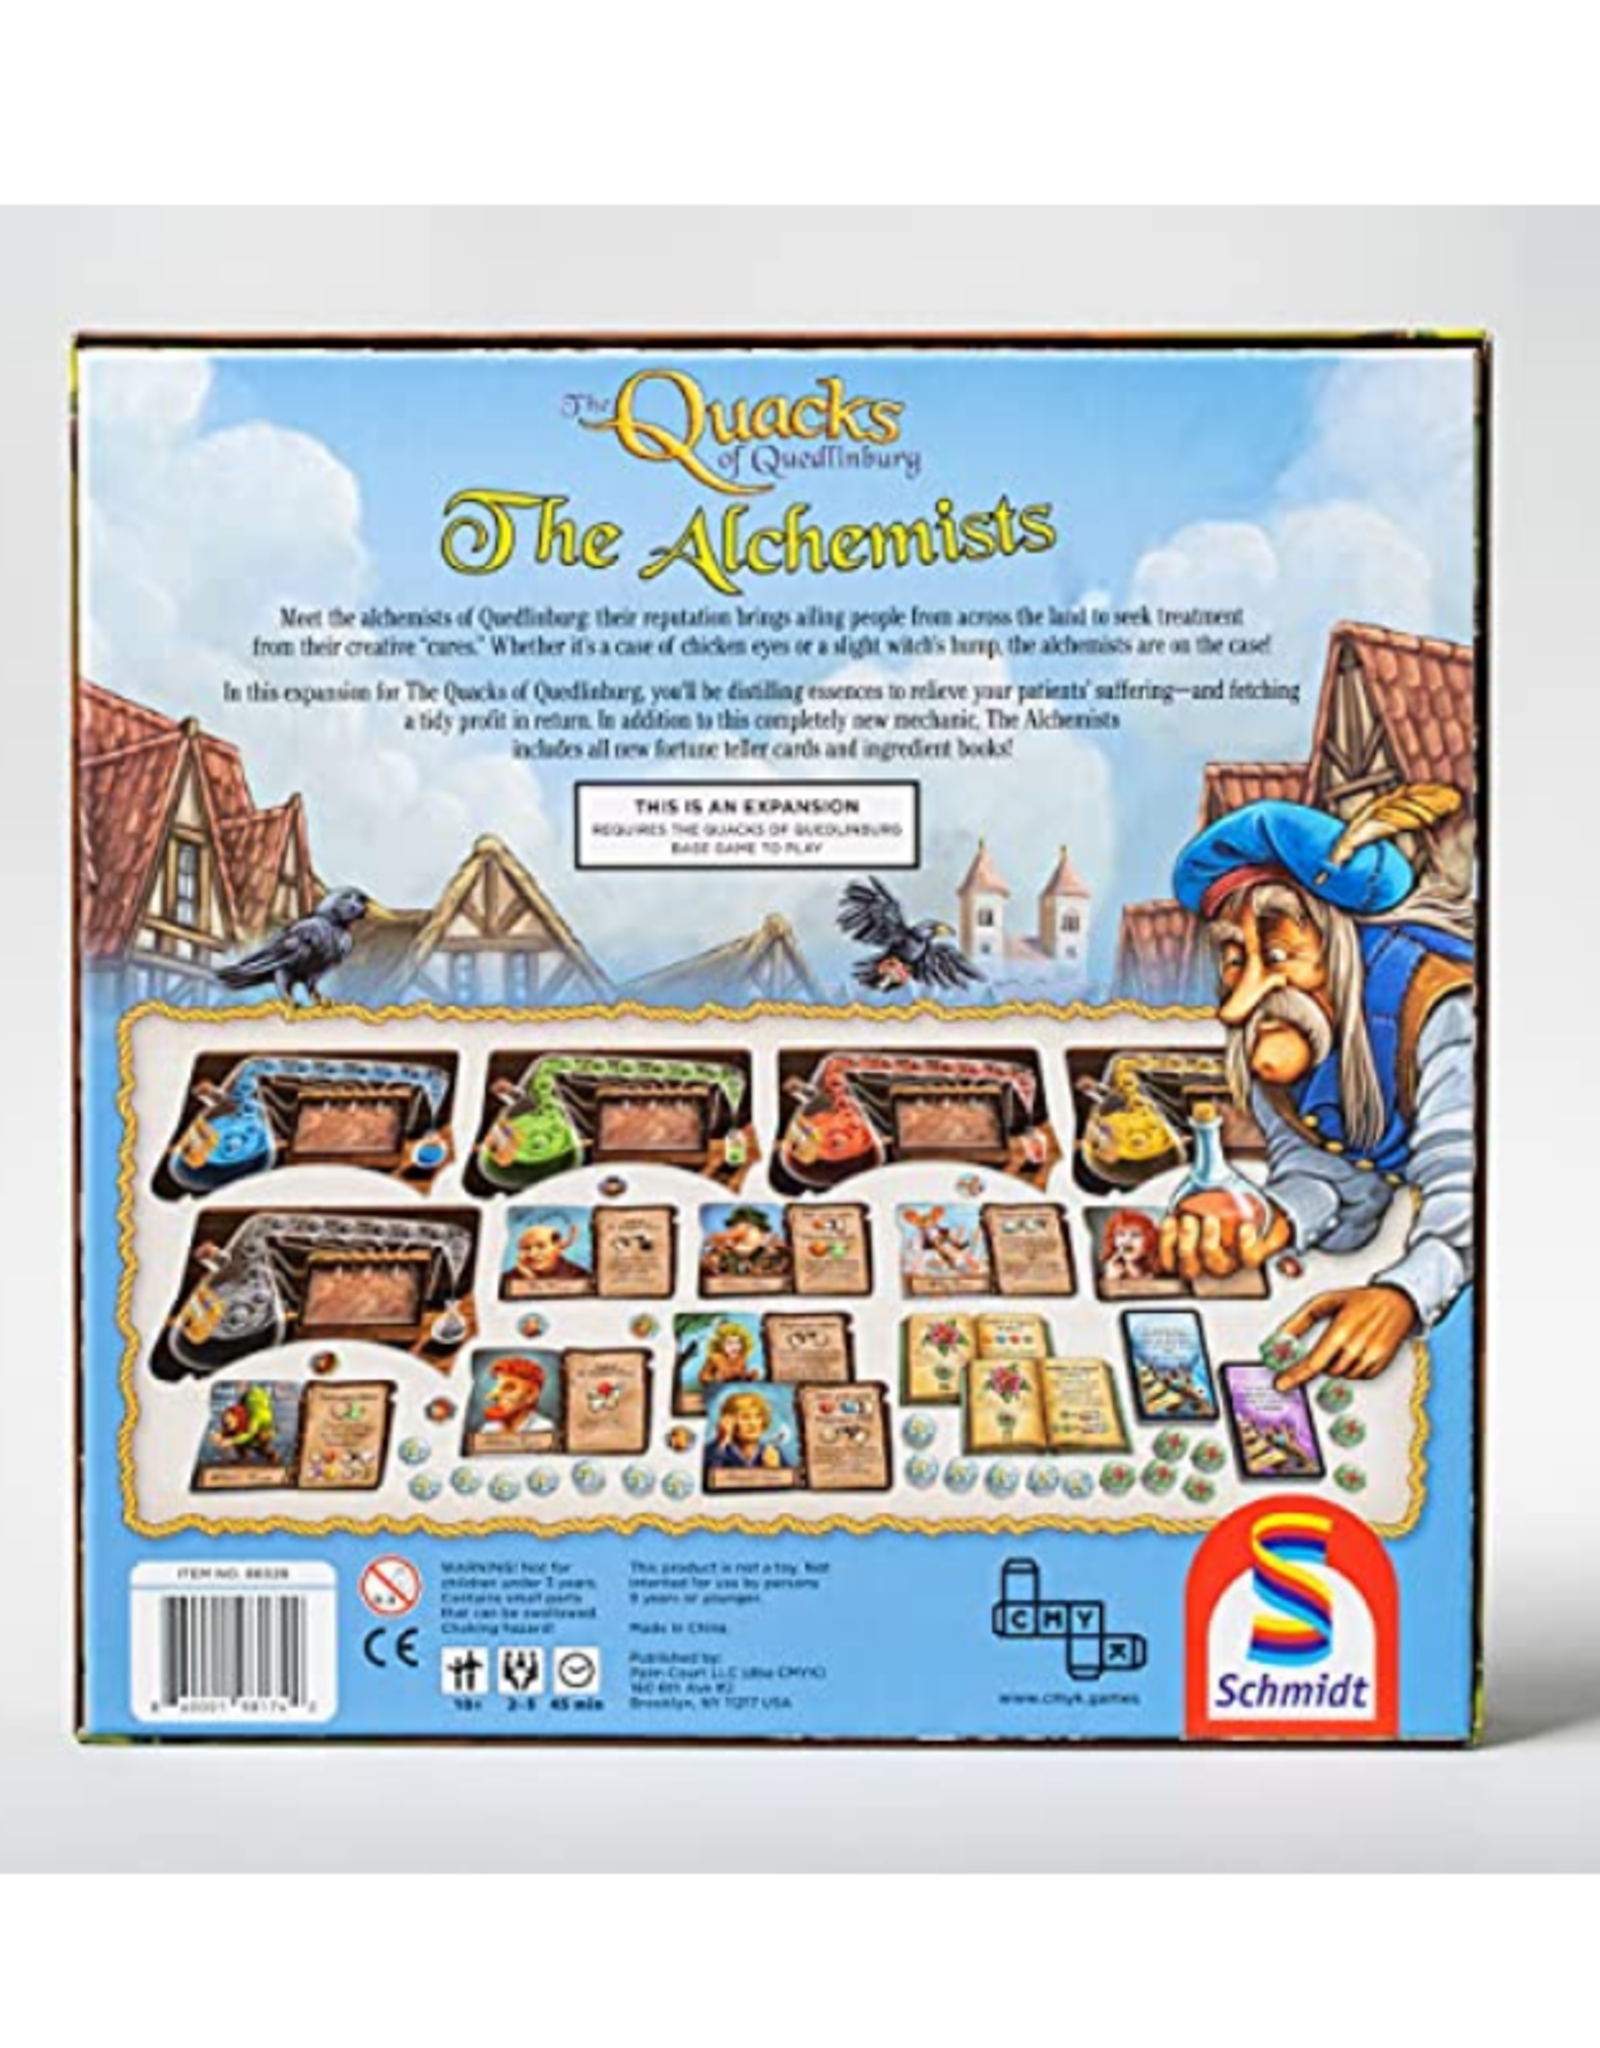 The Quacks of Quedlinburg: The Alchemists Expansion